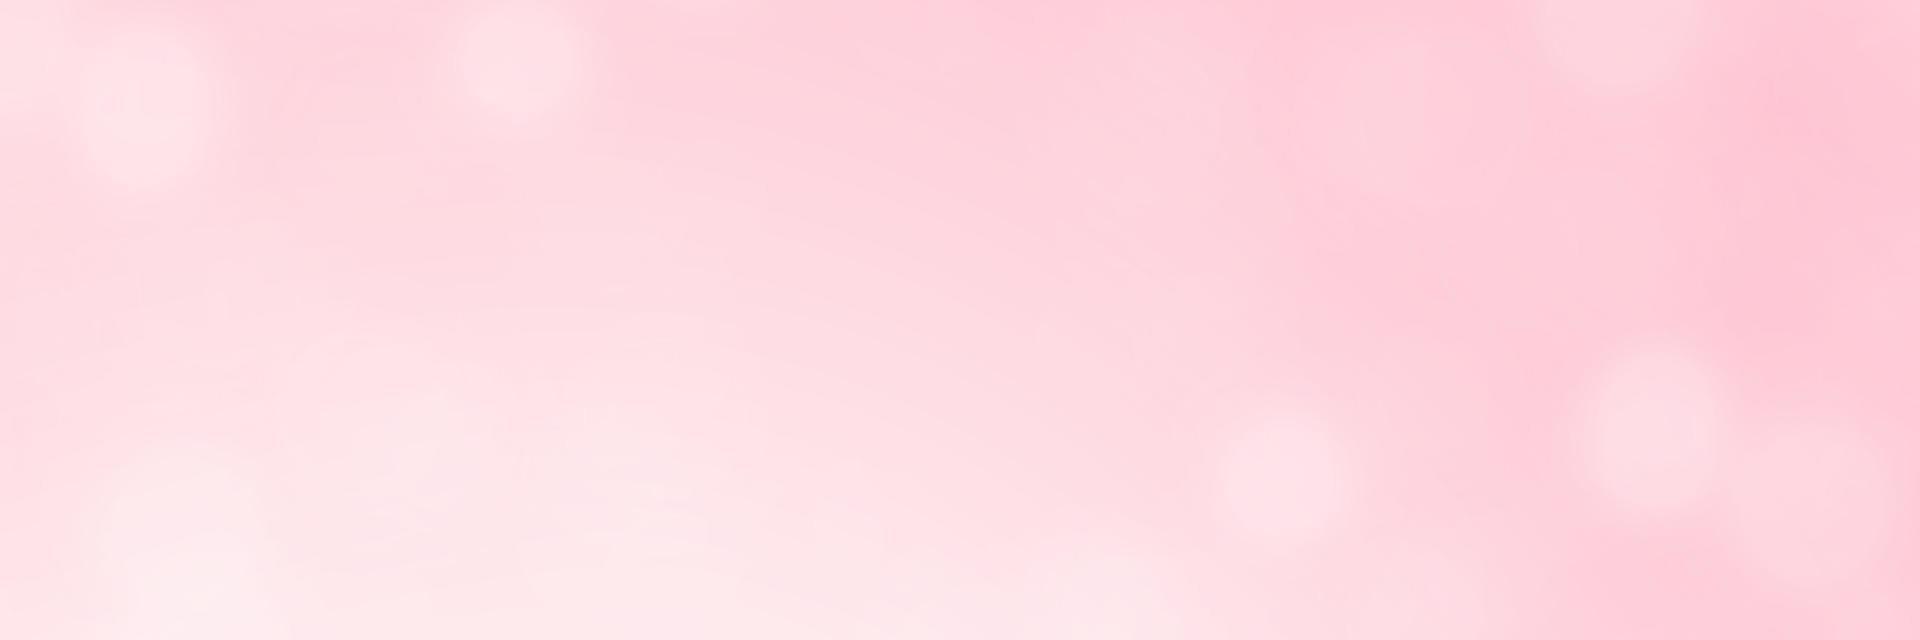 fondo de banner rosa con bokeh. ilustración vectorial vector